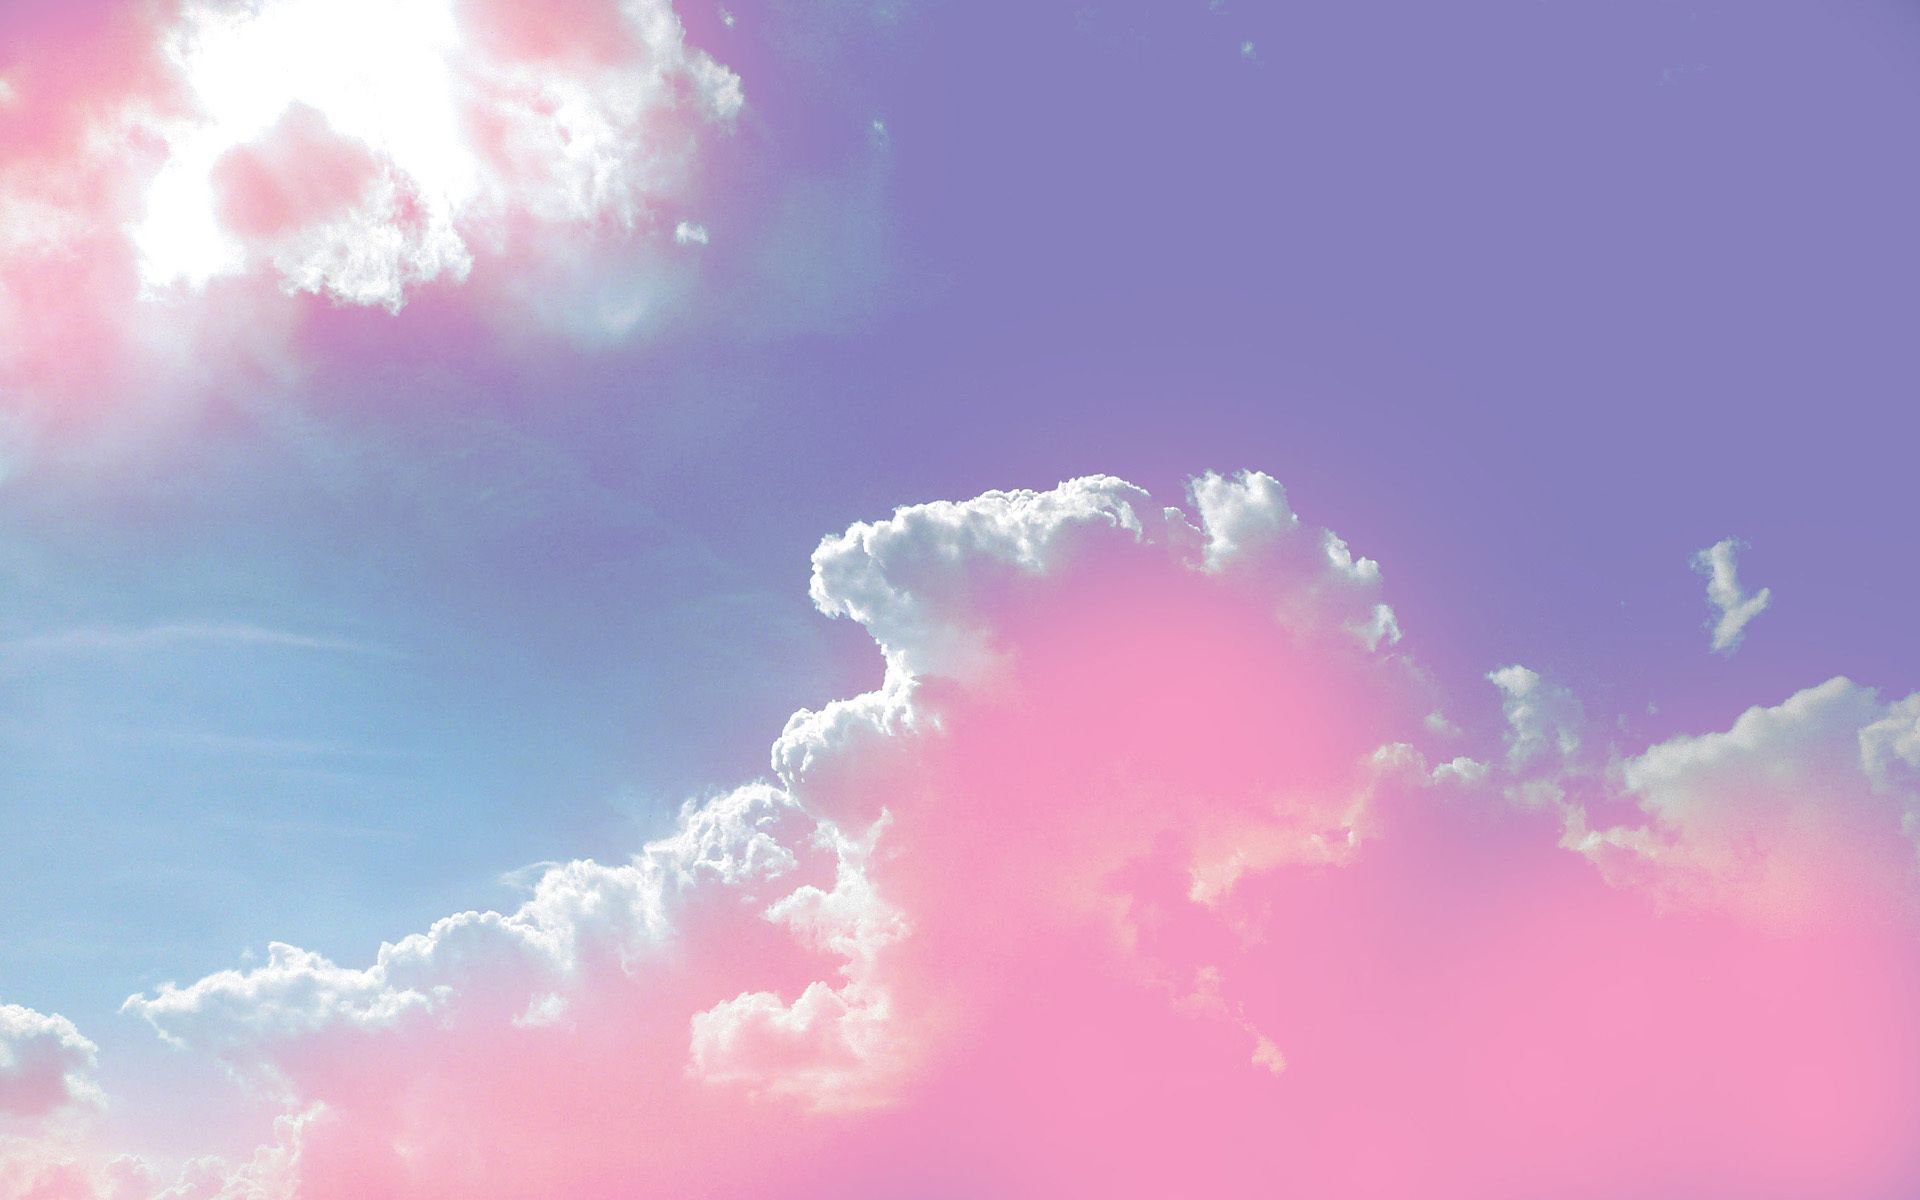 Desktop Sky Background. Wallpaper, Background, Image, Art Photo. Pink clouds wallpaper, Sky aesthetic, Cloud wallpaper